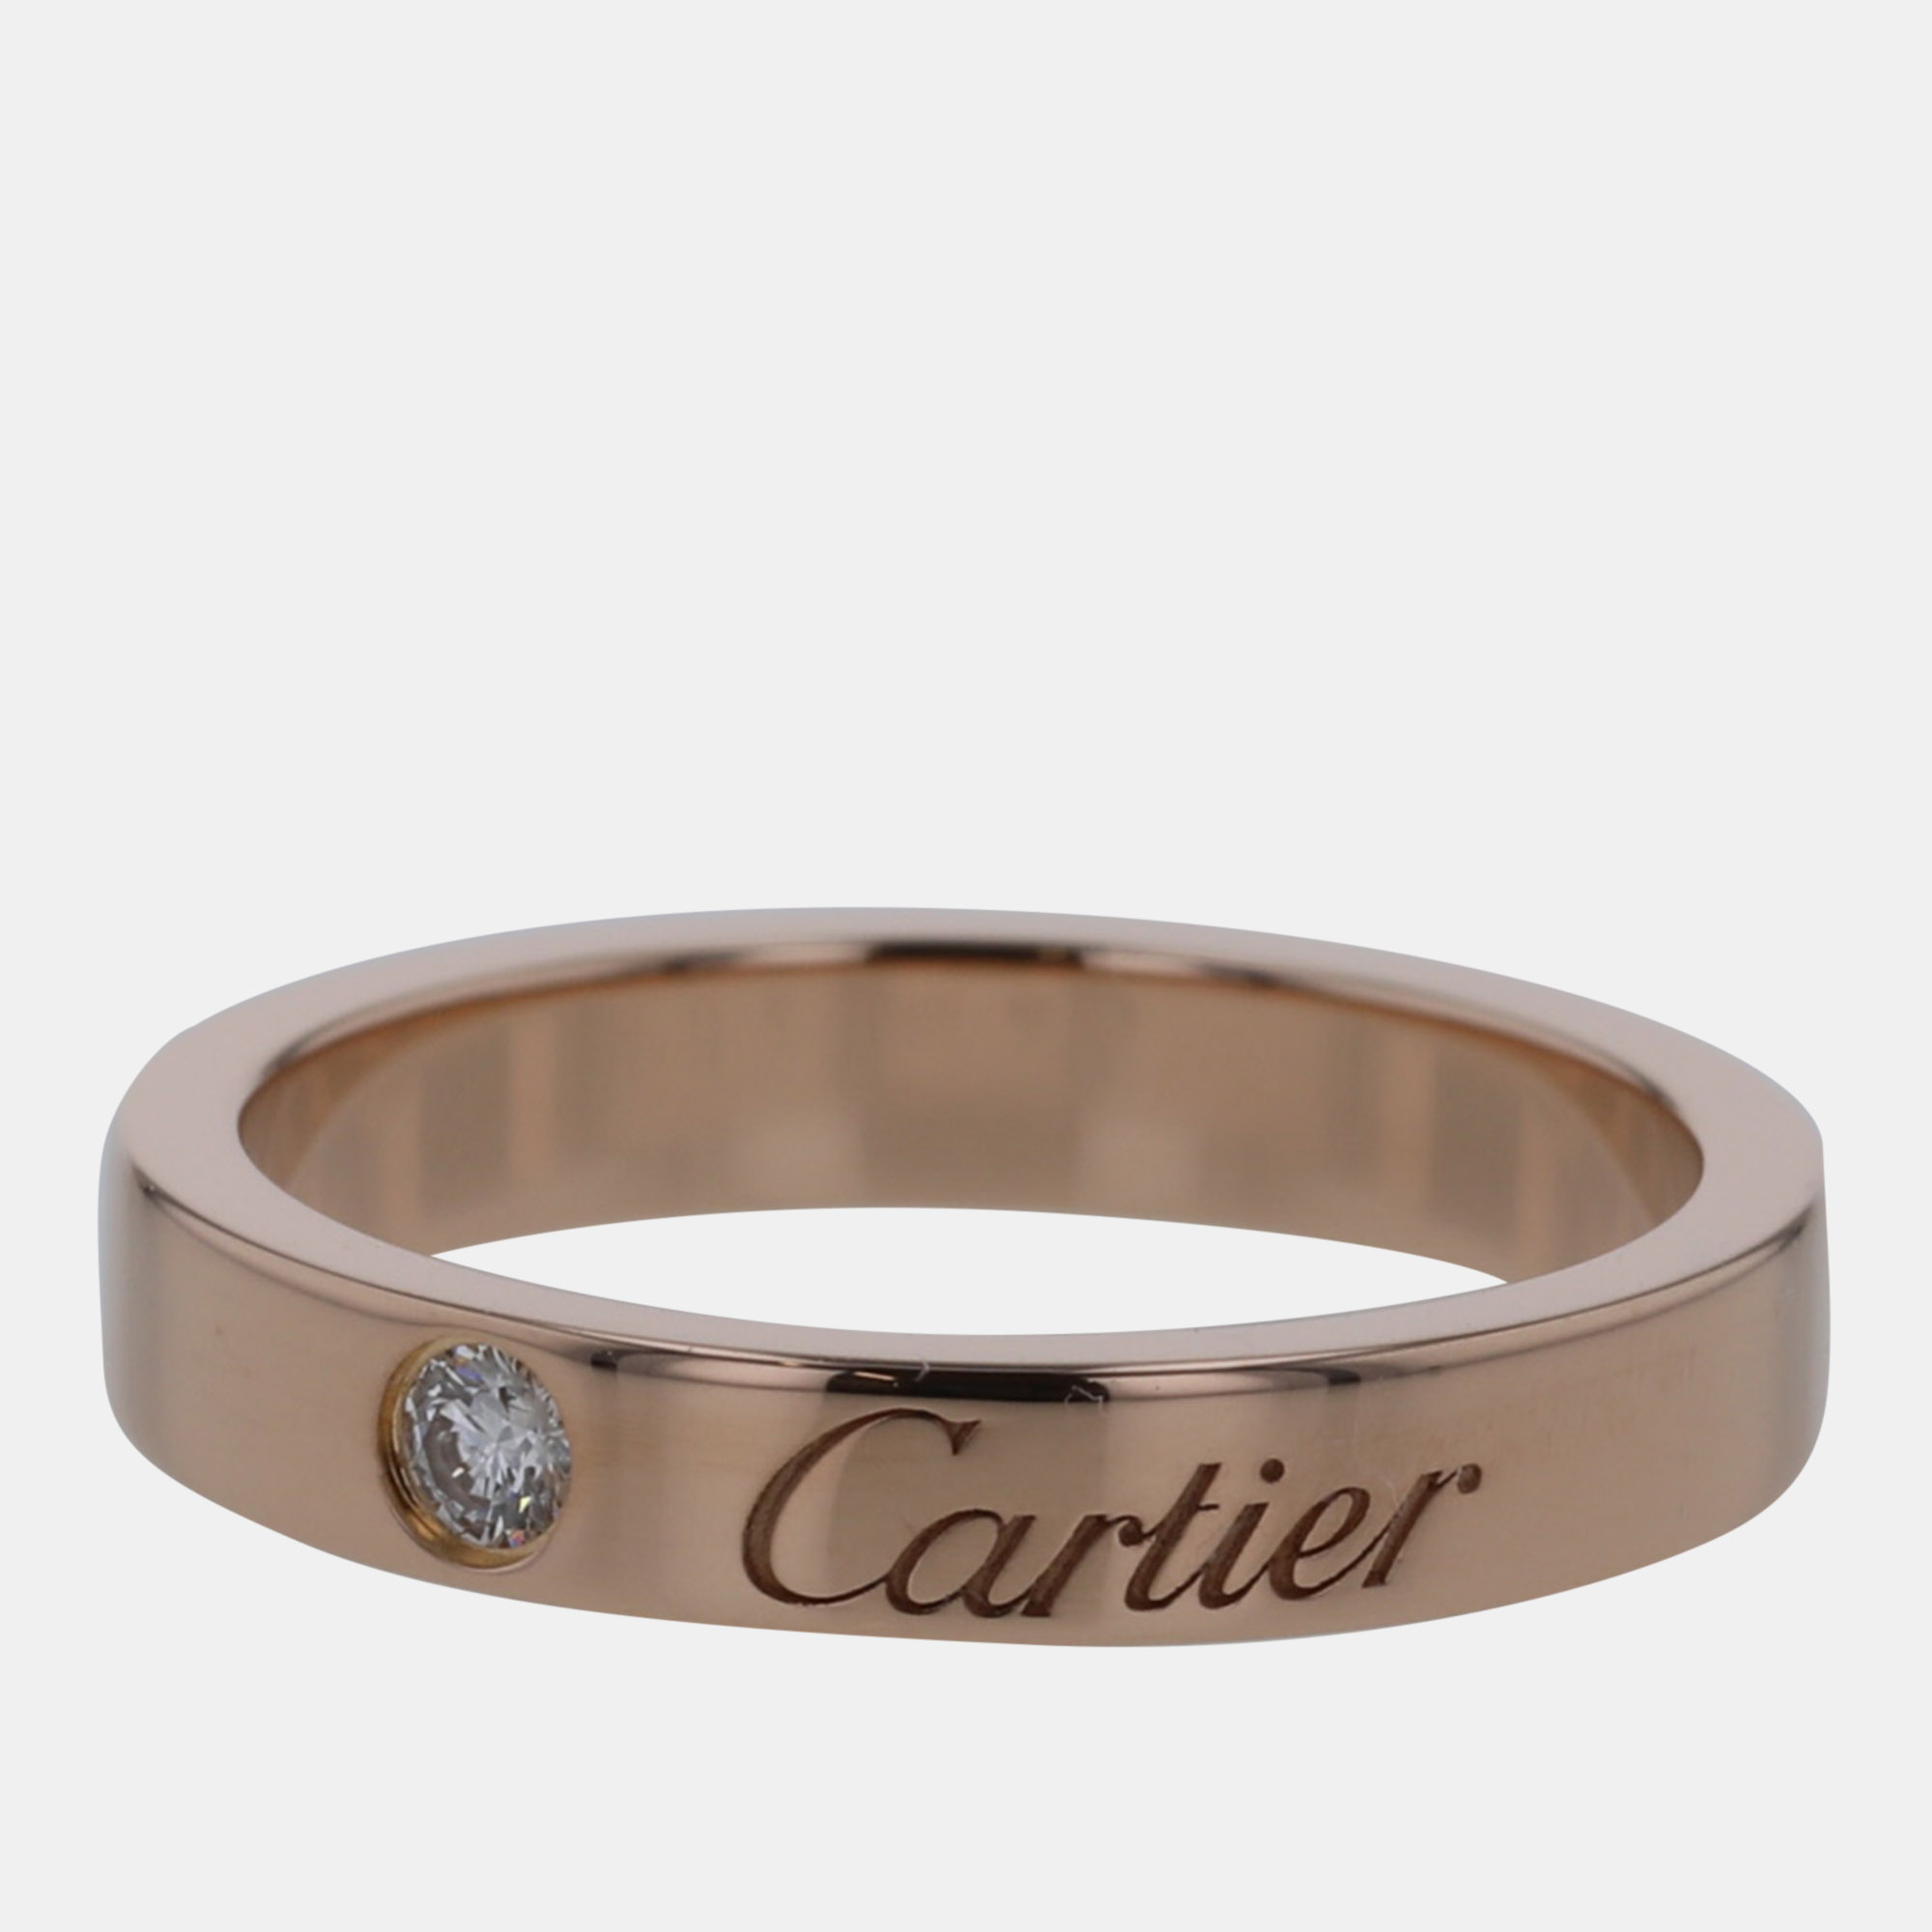 Cartier C De Cartier 18K Rose Gold Diamond Ring EU 47